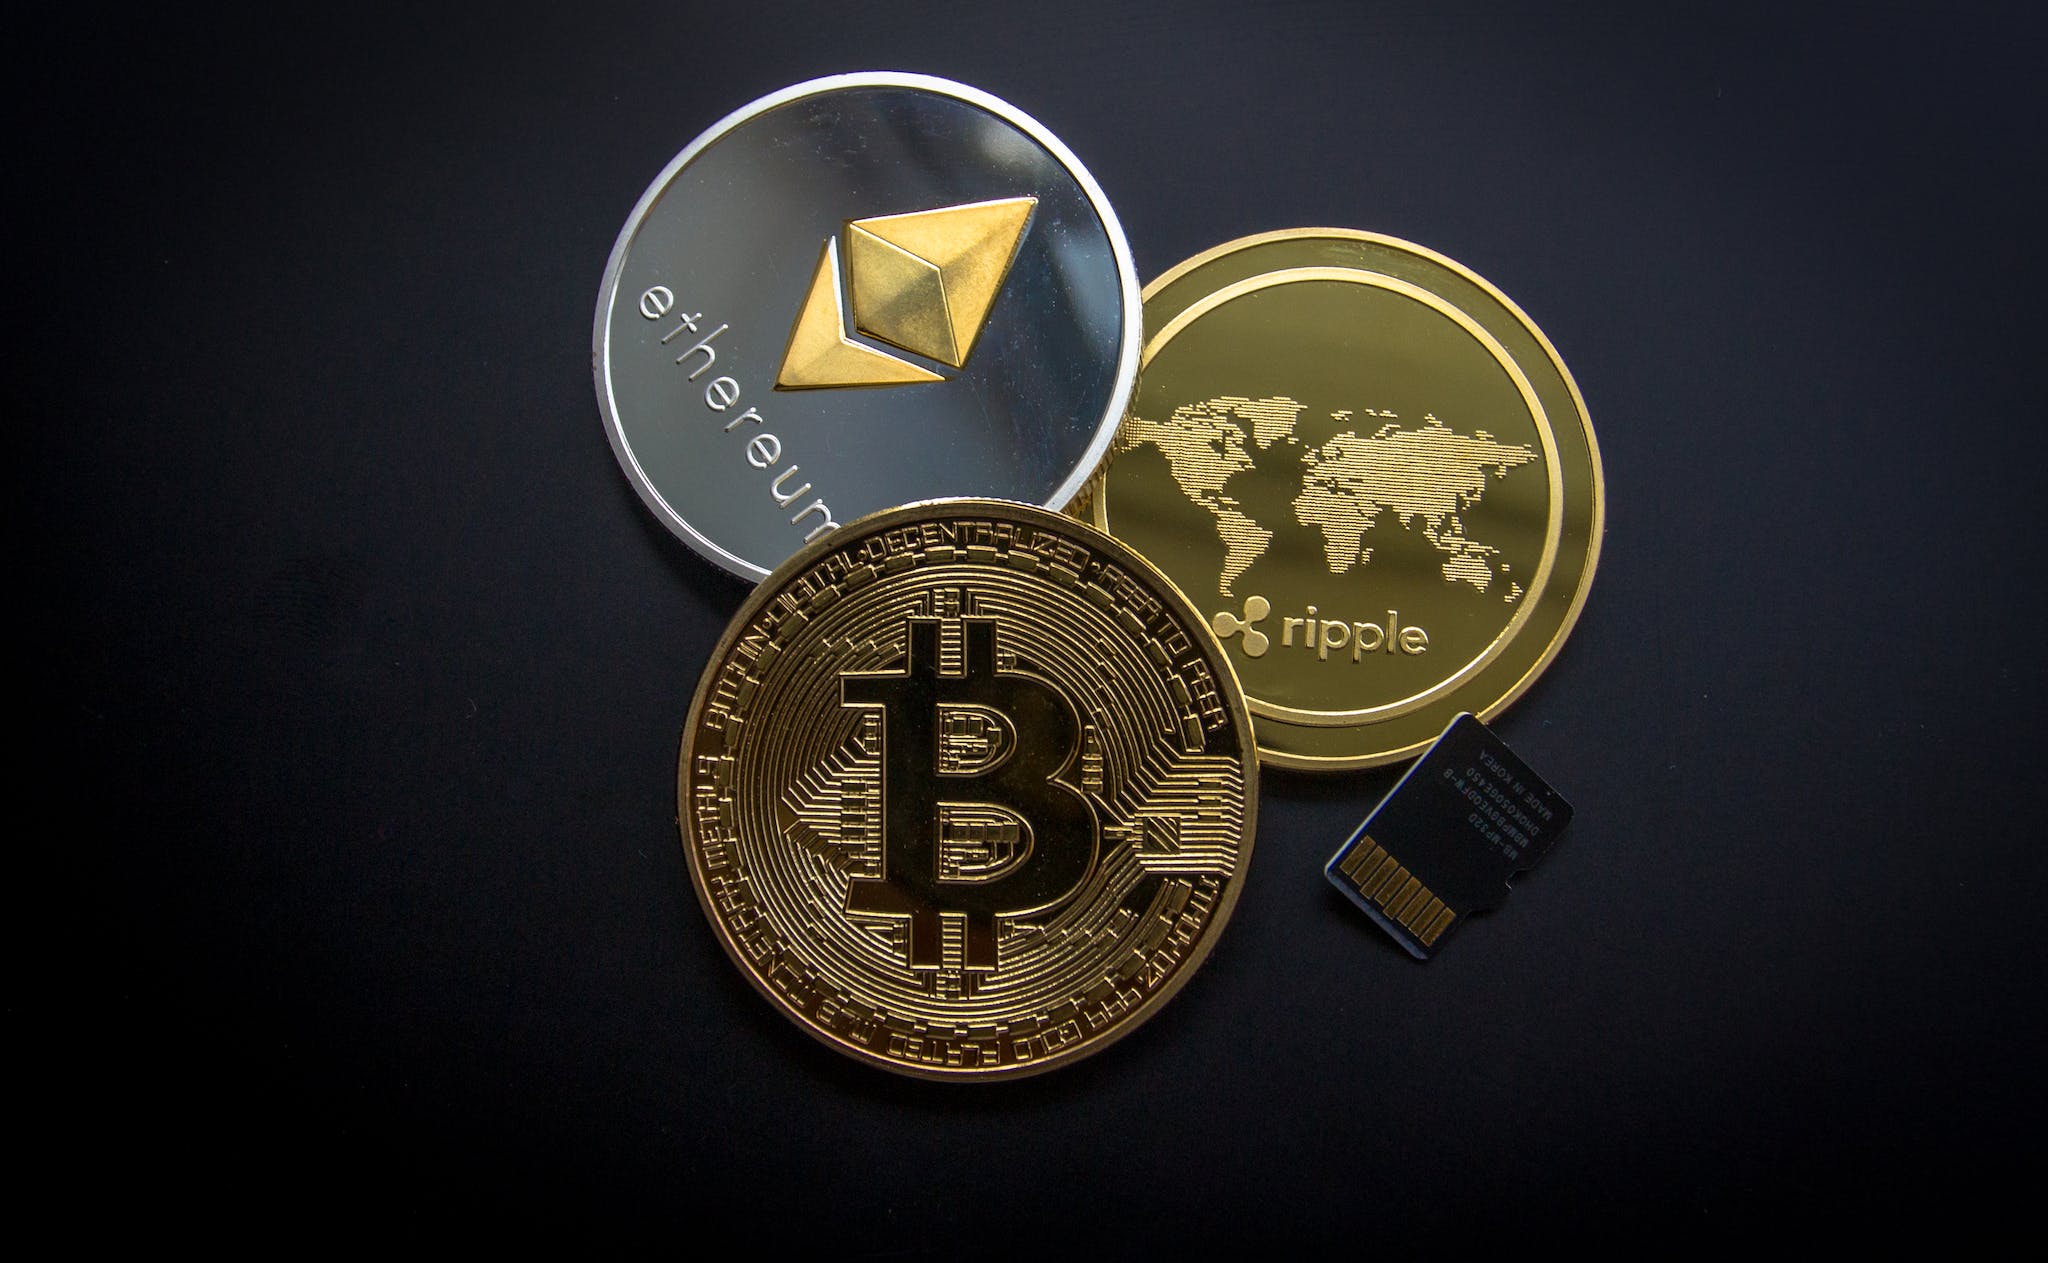 bitcoin, ethereum, ripple coins and sd card on dark surface.